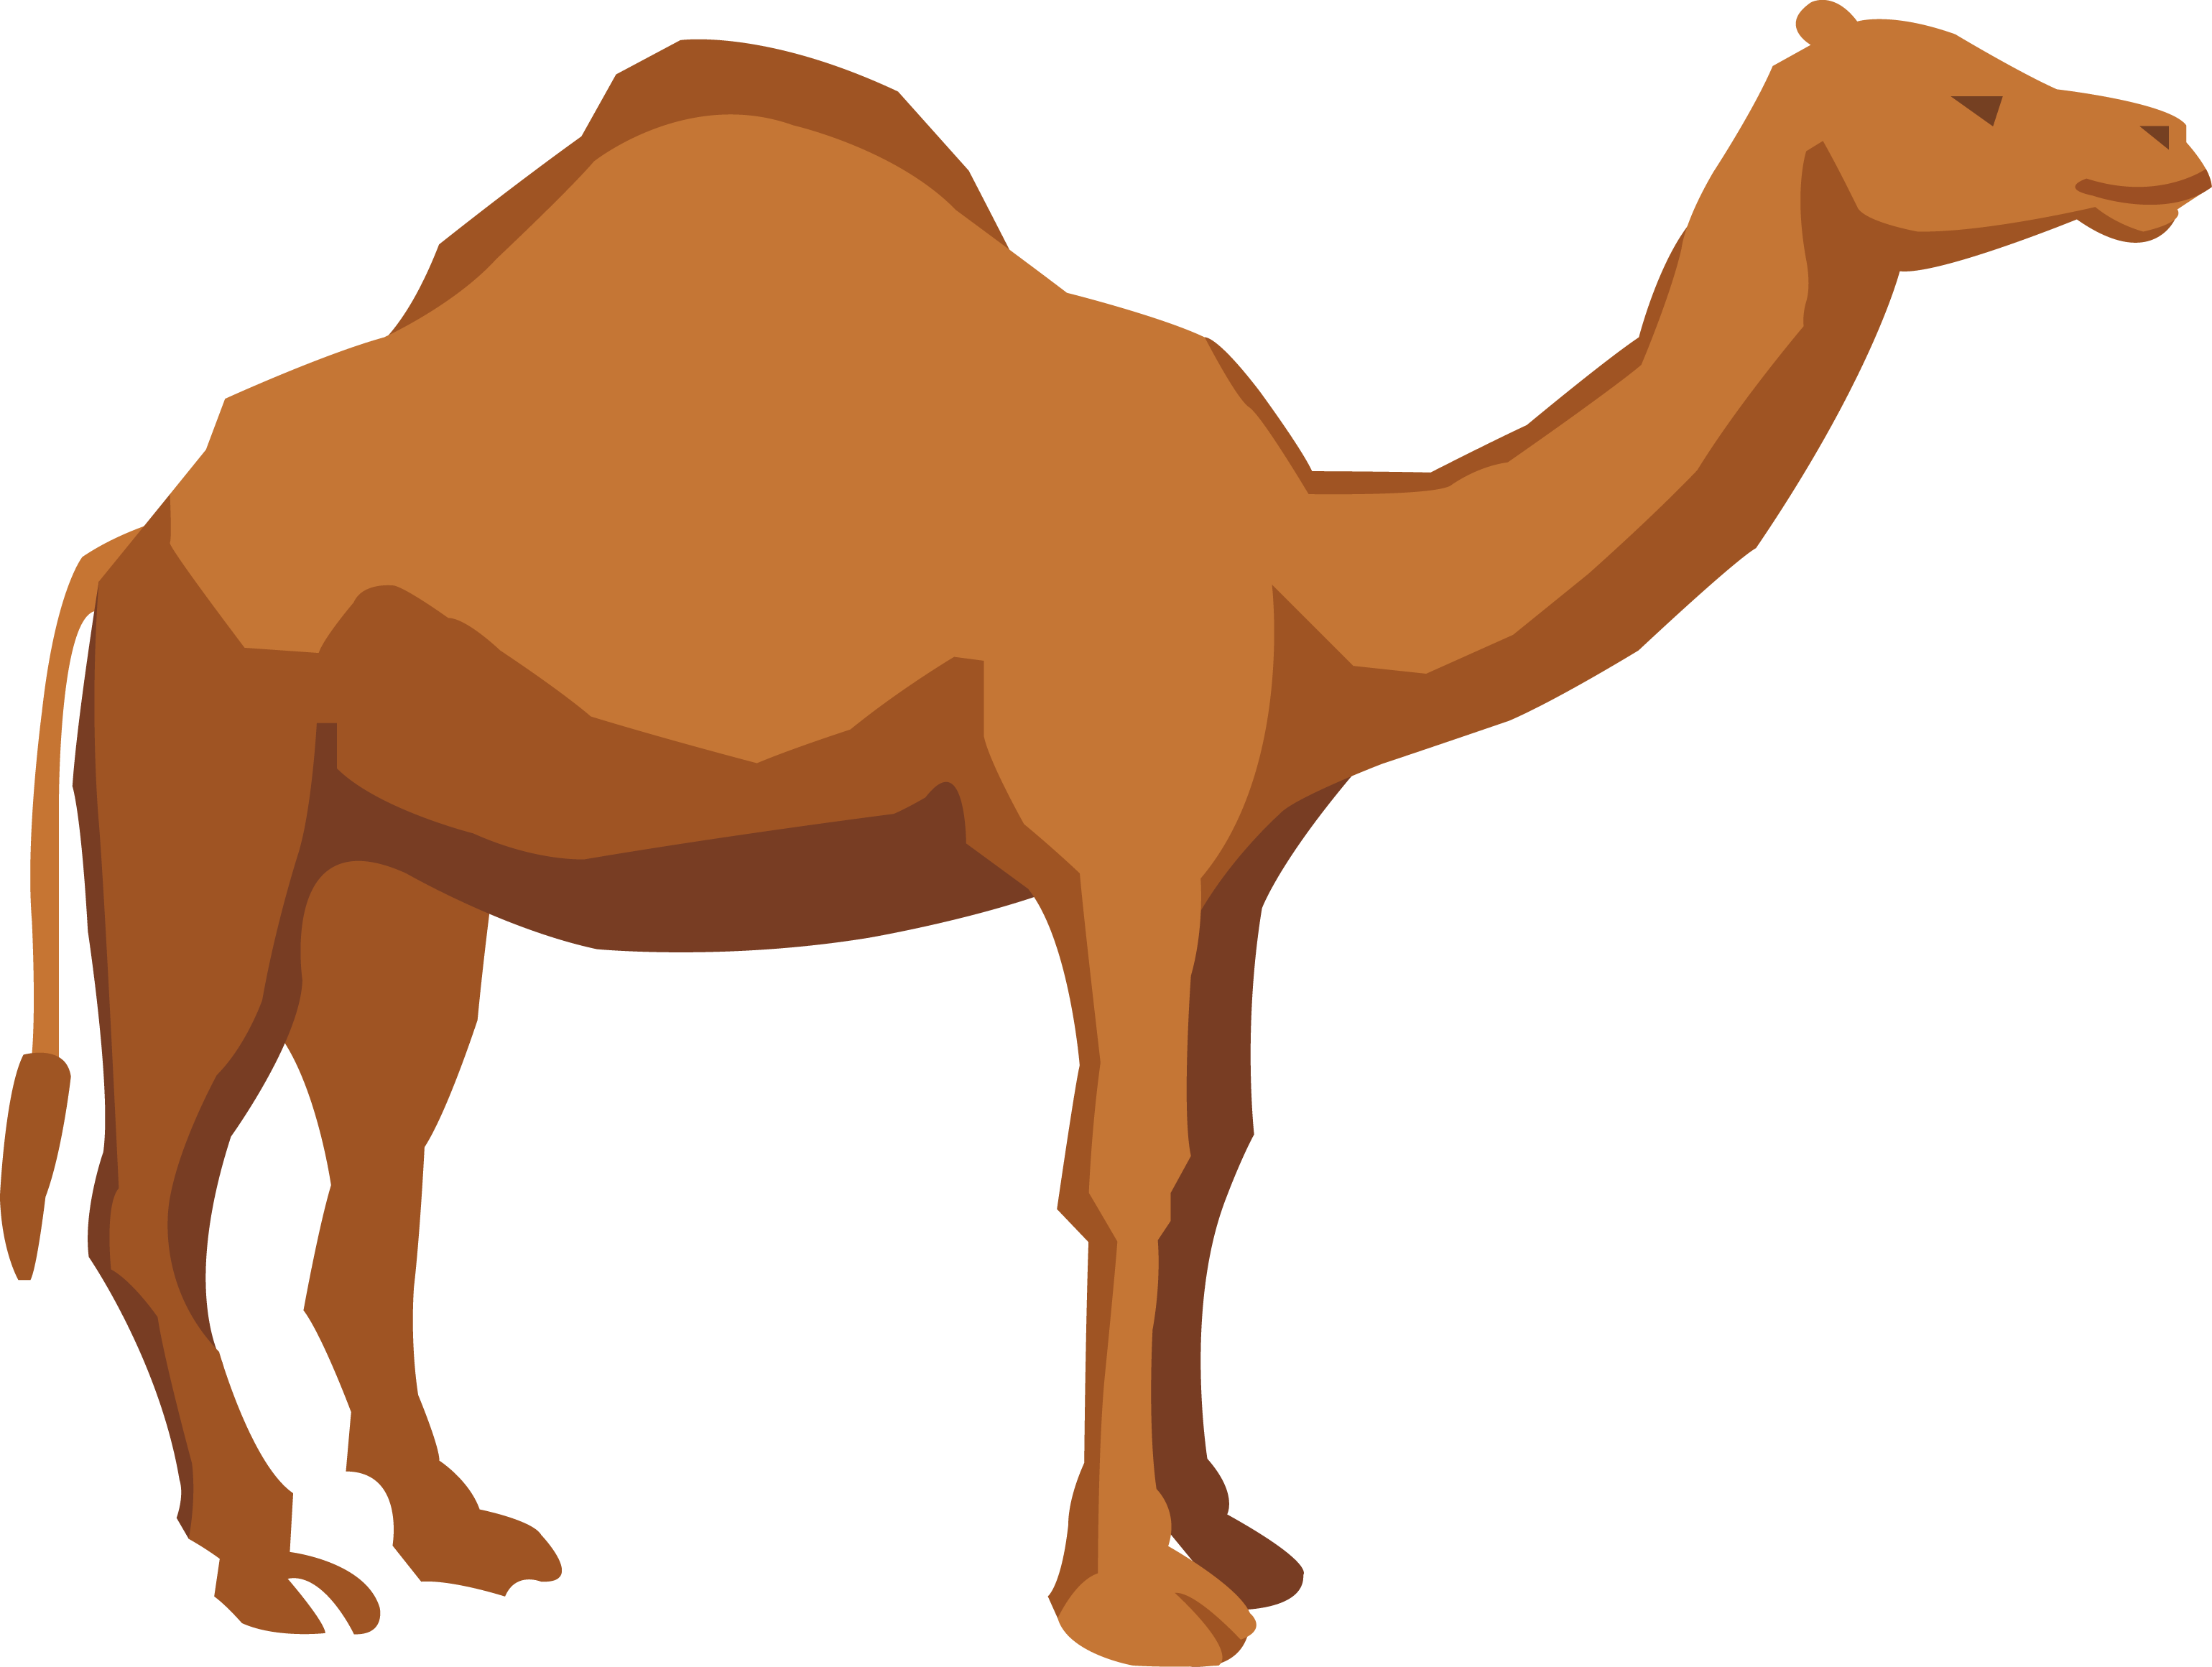 Dromedary Apache Camel Illustration - Camel (3079x2321)